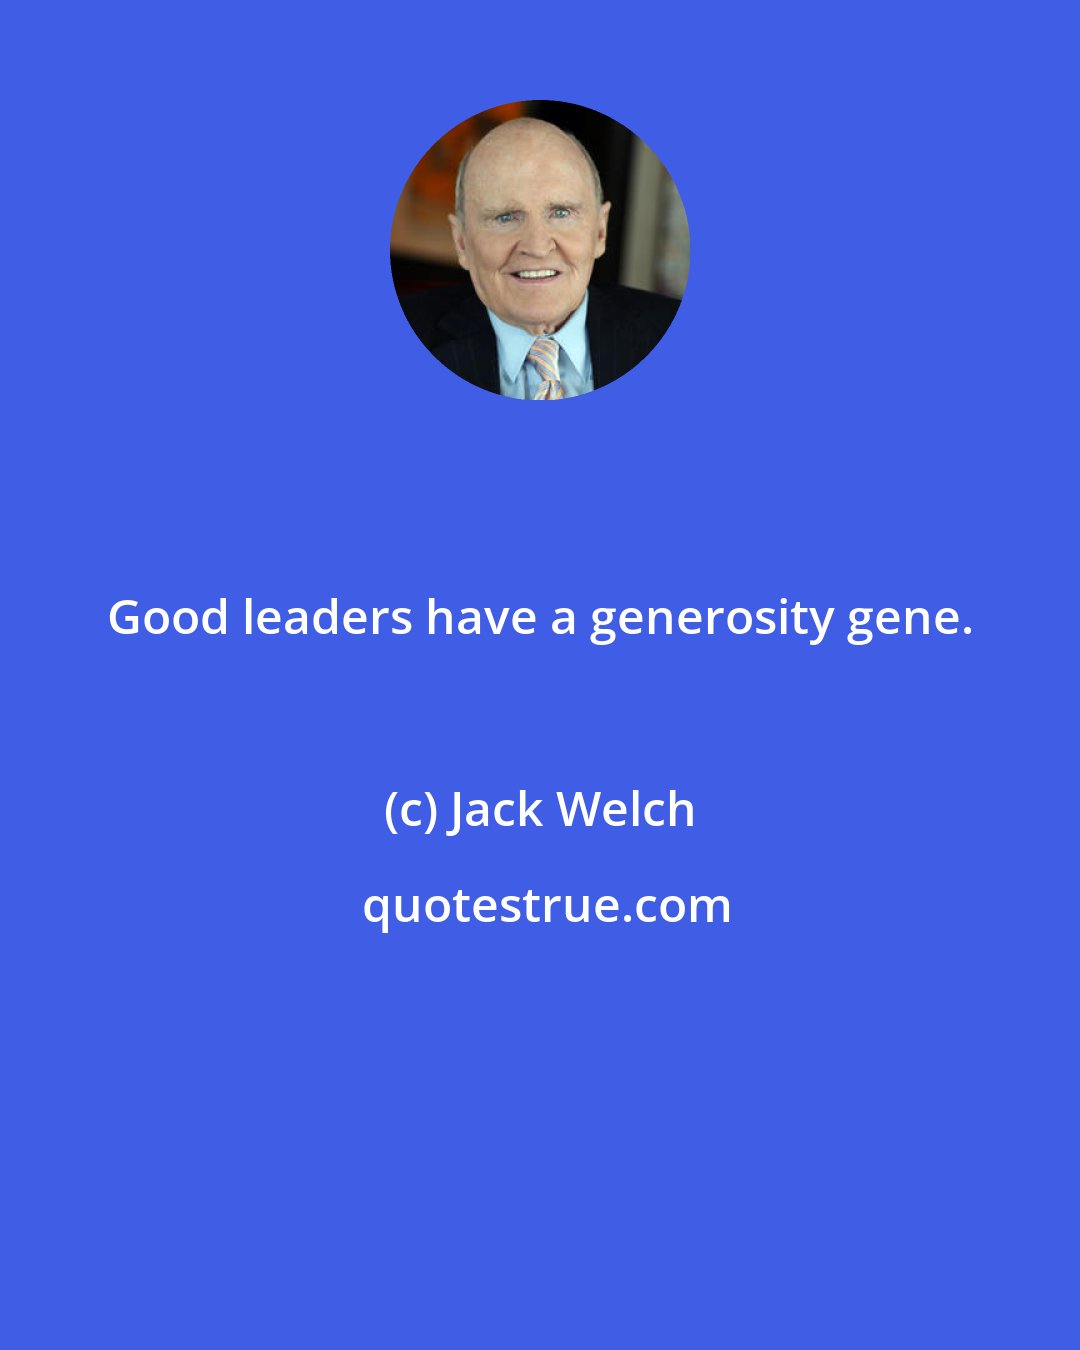 Jack Welch: Good leaders have a generosity gene.